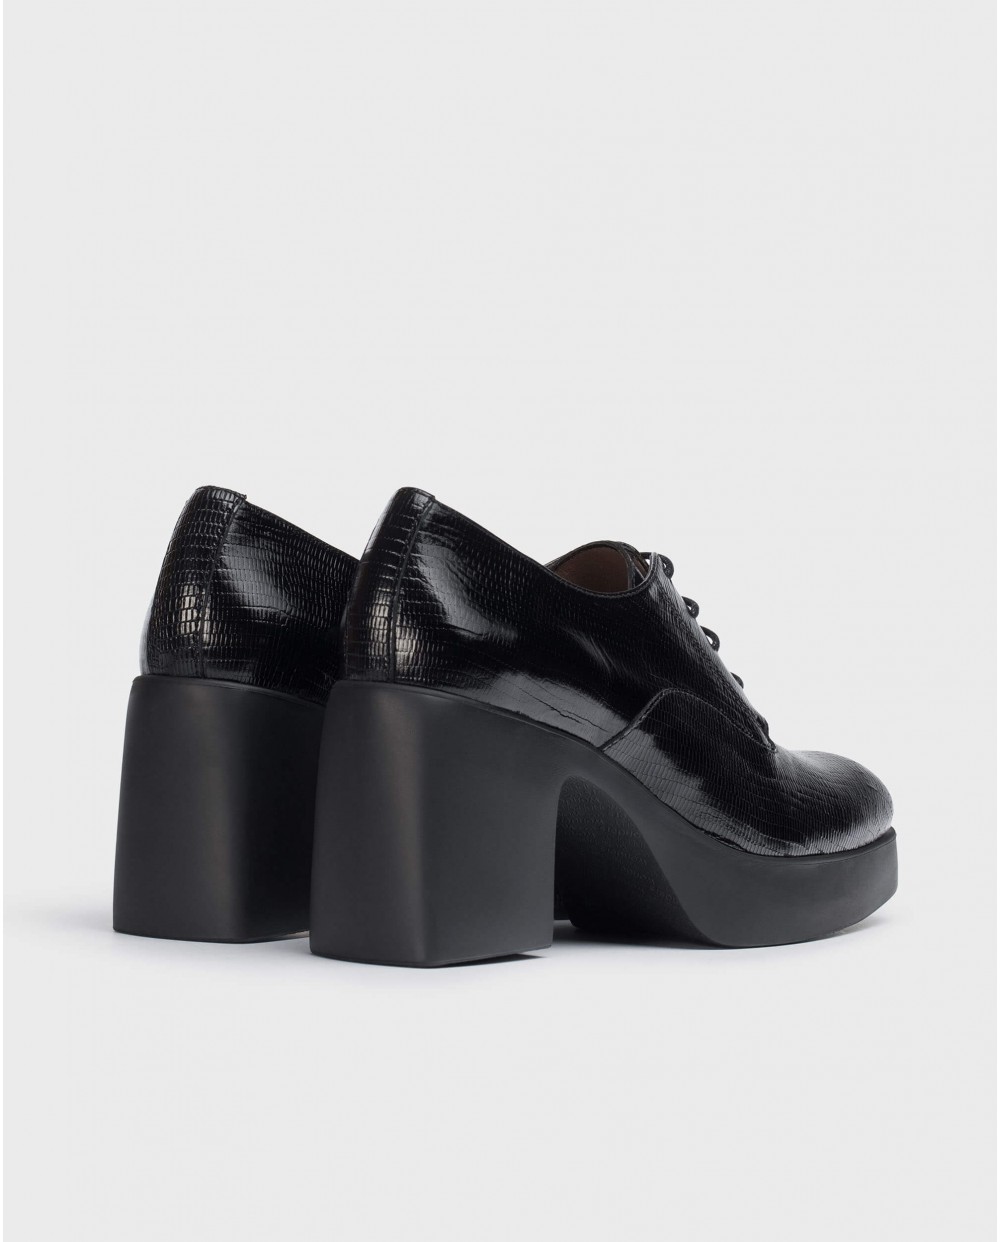 Wonders-Platforms-Black Loira shoes.